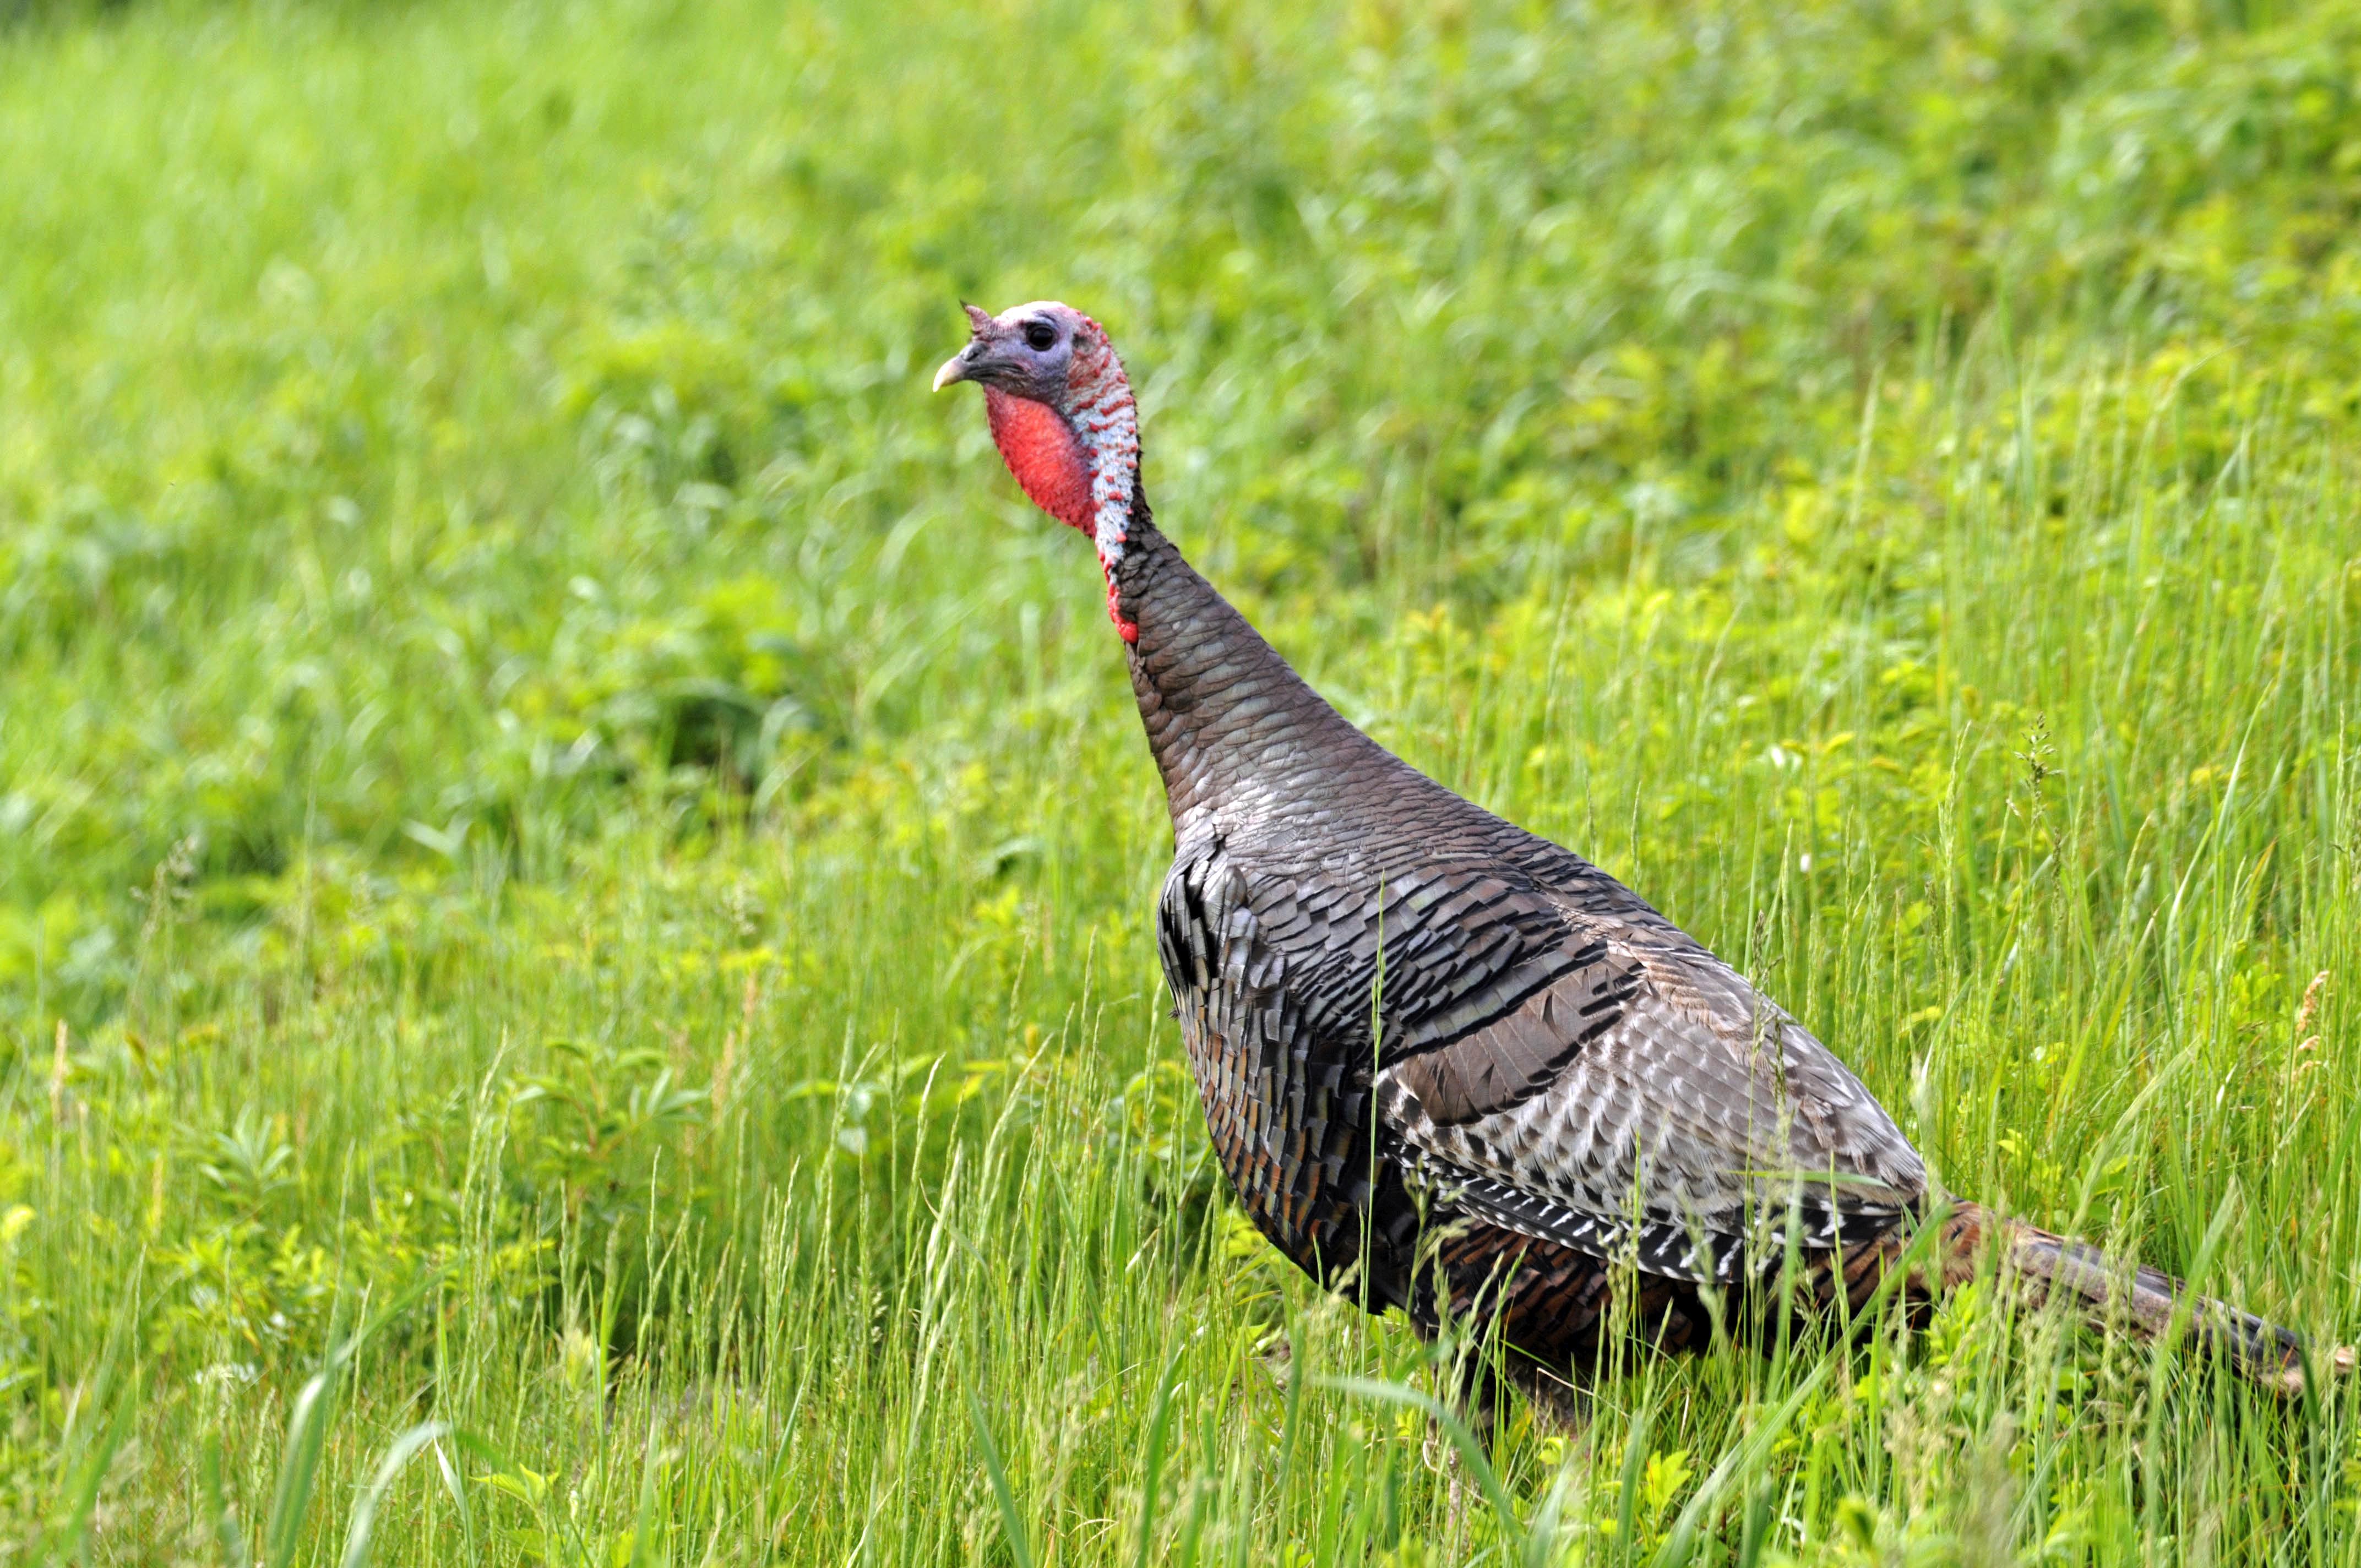 A wild turkey (fat brown ground bird) in green grass stretches its neck and looks alert.